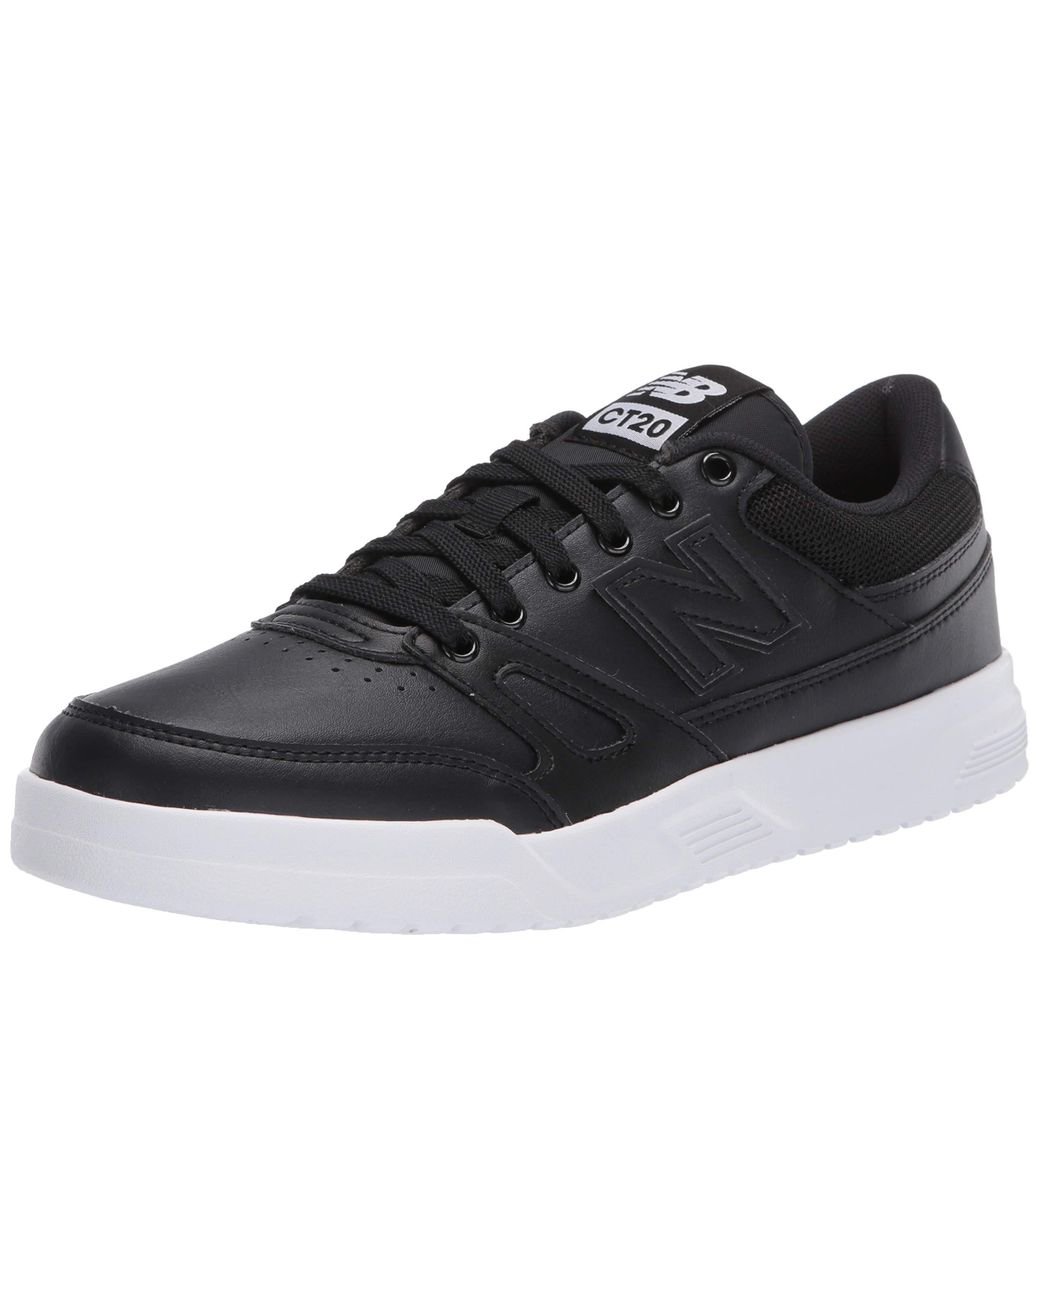 New Balance Ct20 V1 Sneaker in White/Black (Black) for Men - Save 17% ...